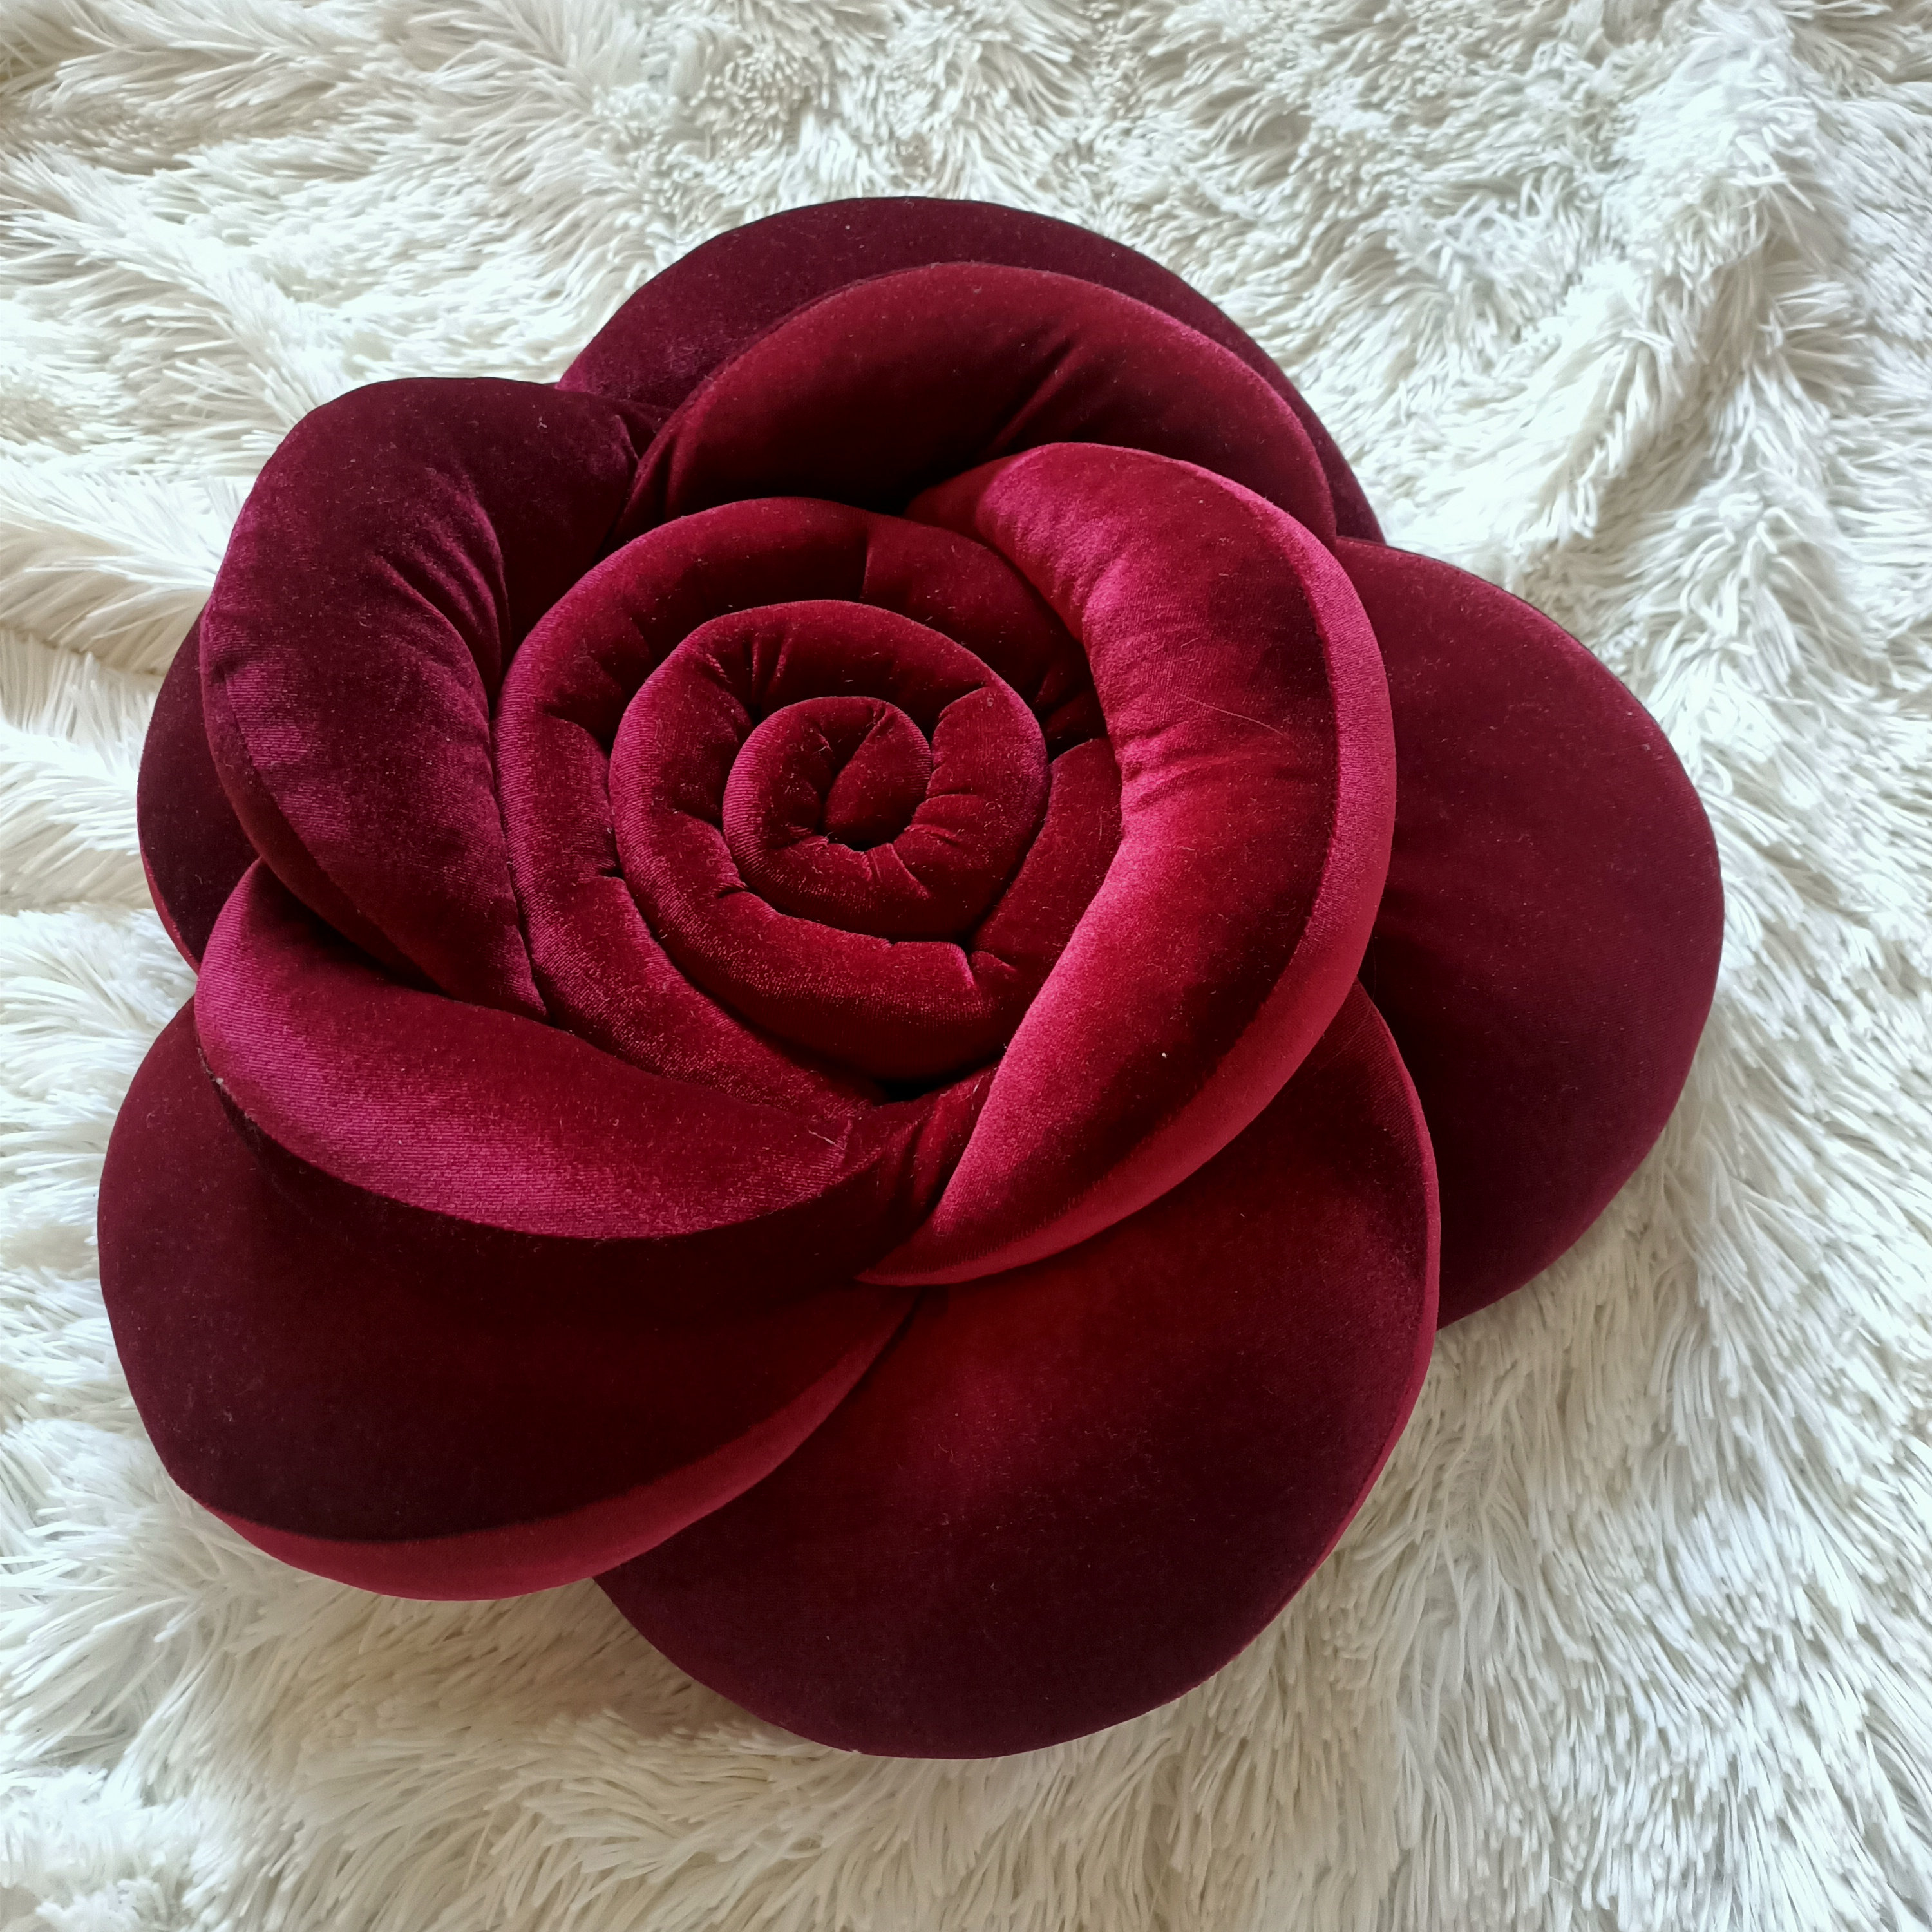 Pink & Burgundy Drop Repeat Floral Pillow